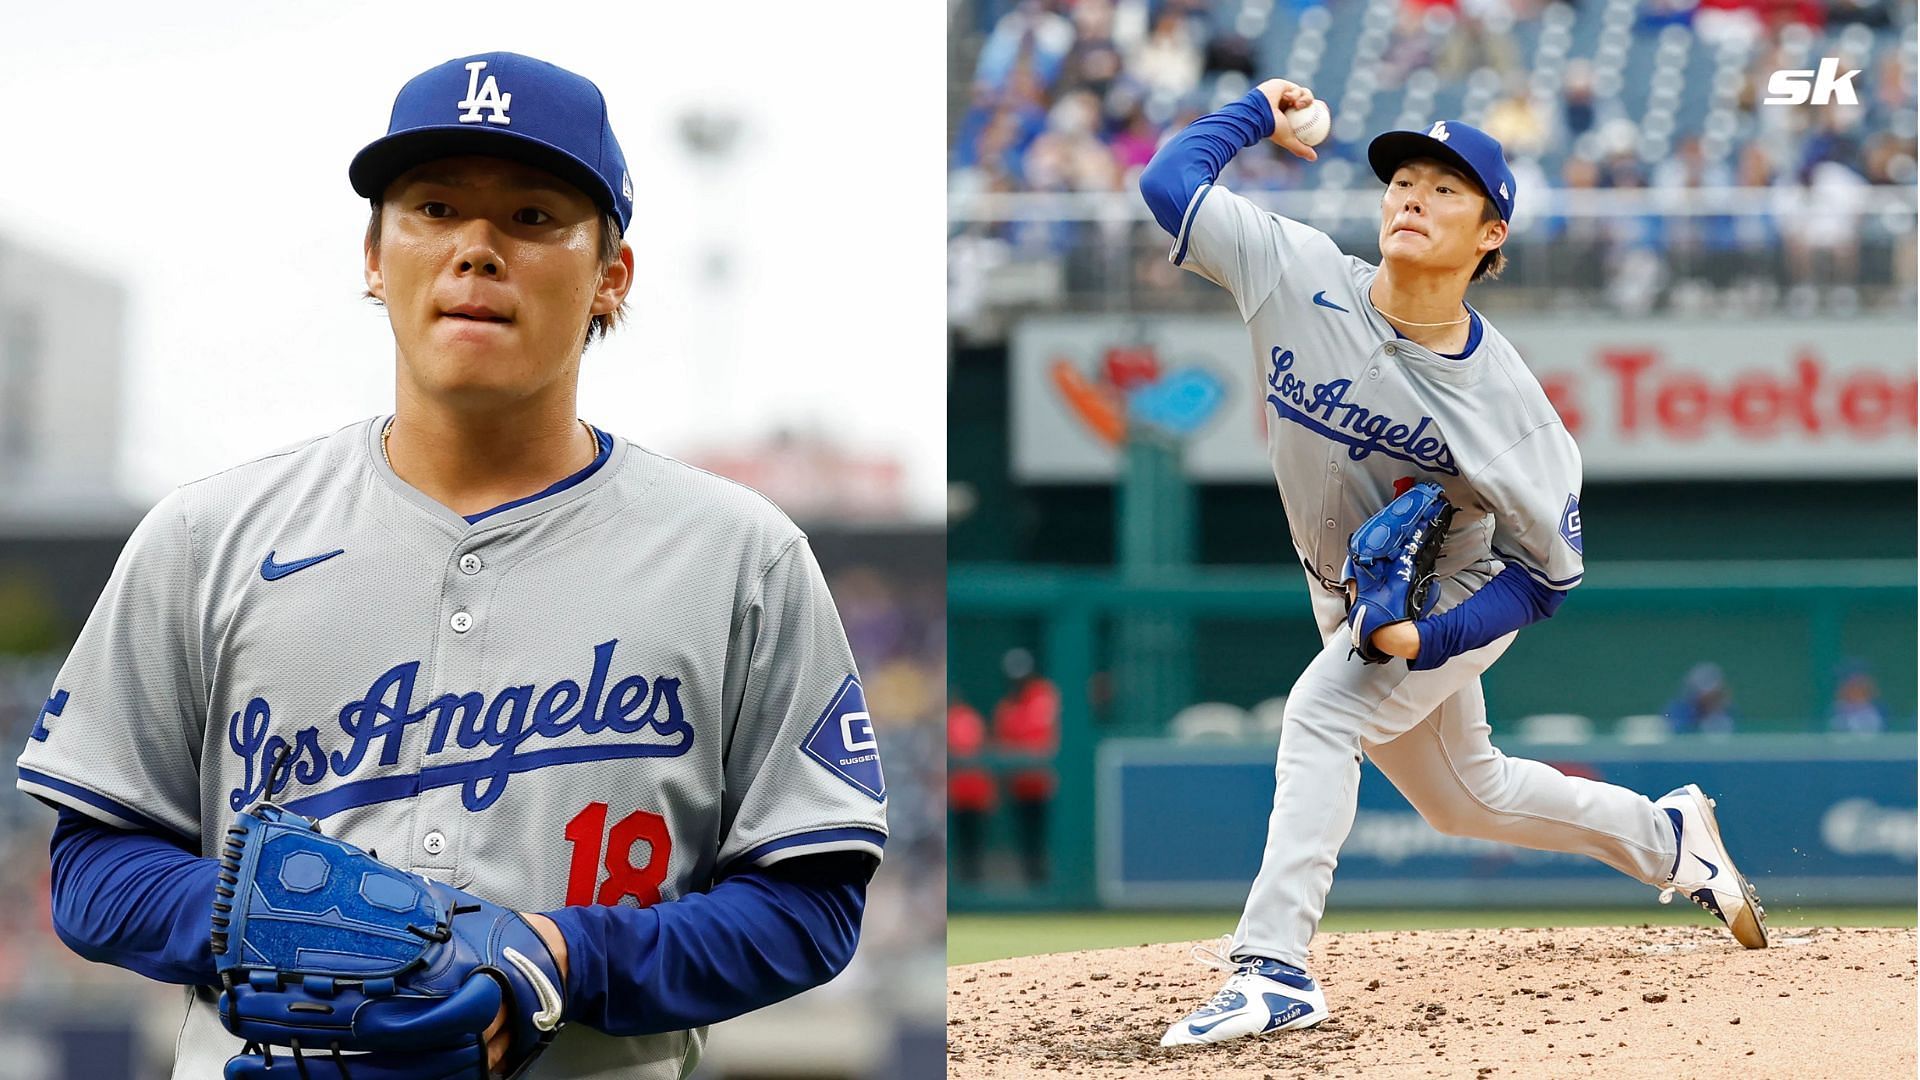 WATCH: Dodgers star Yoshinobu Yamamoto makes incredible face-saving catch on 104.8 mph comebacker